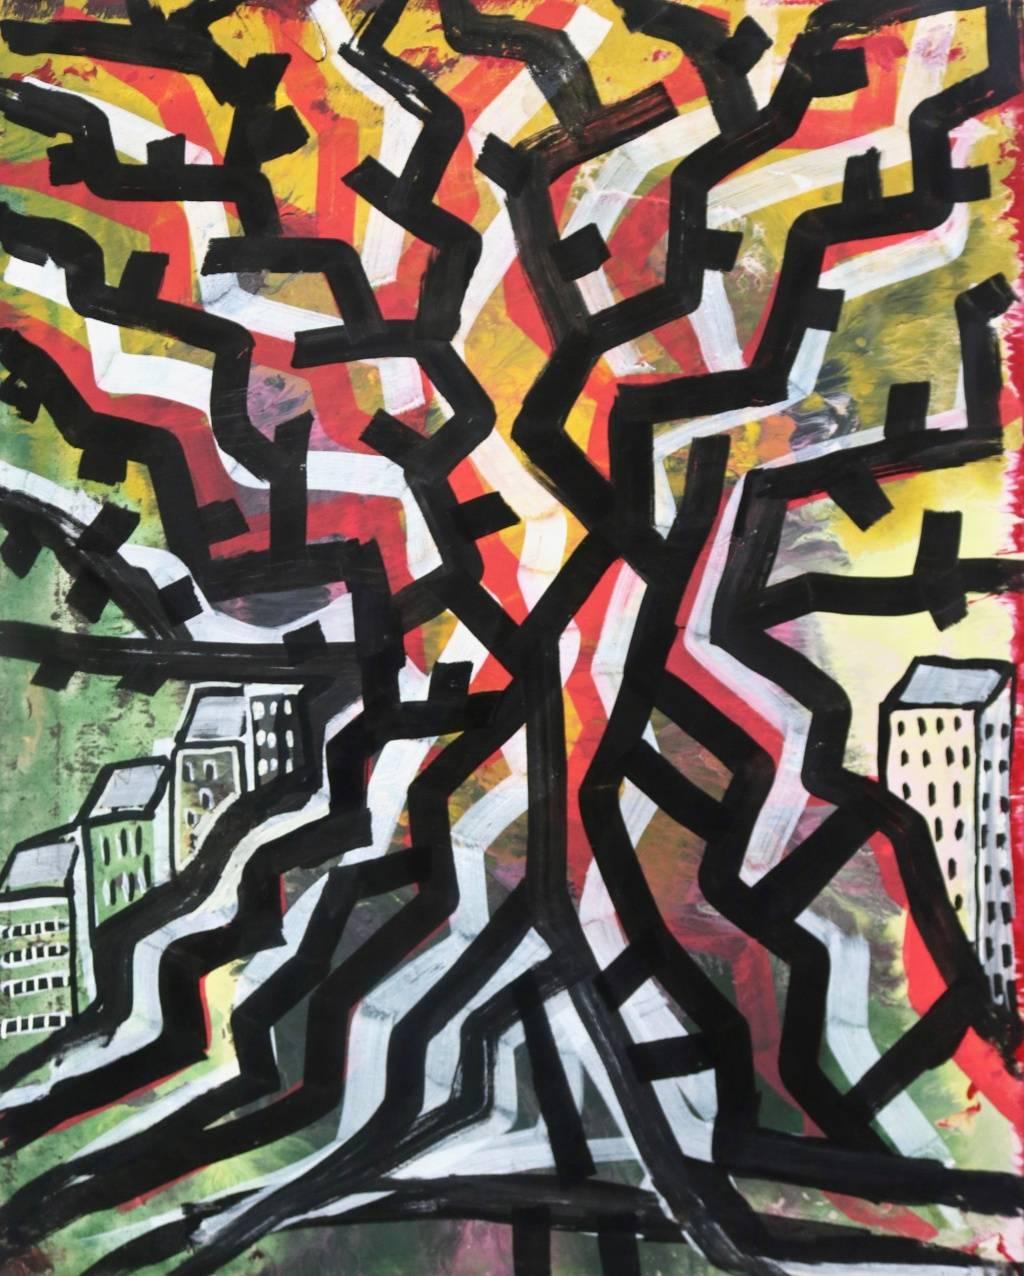 Translated title: "Tree (outskirts)"

Acrylic on canvas. 